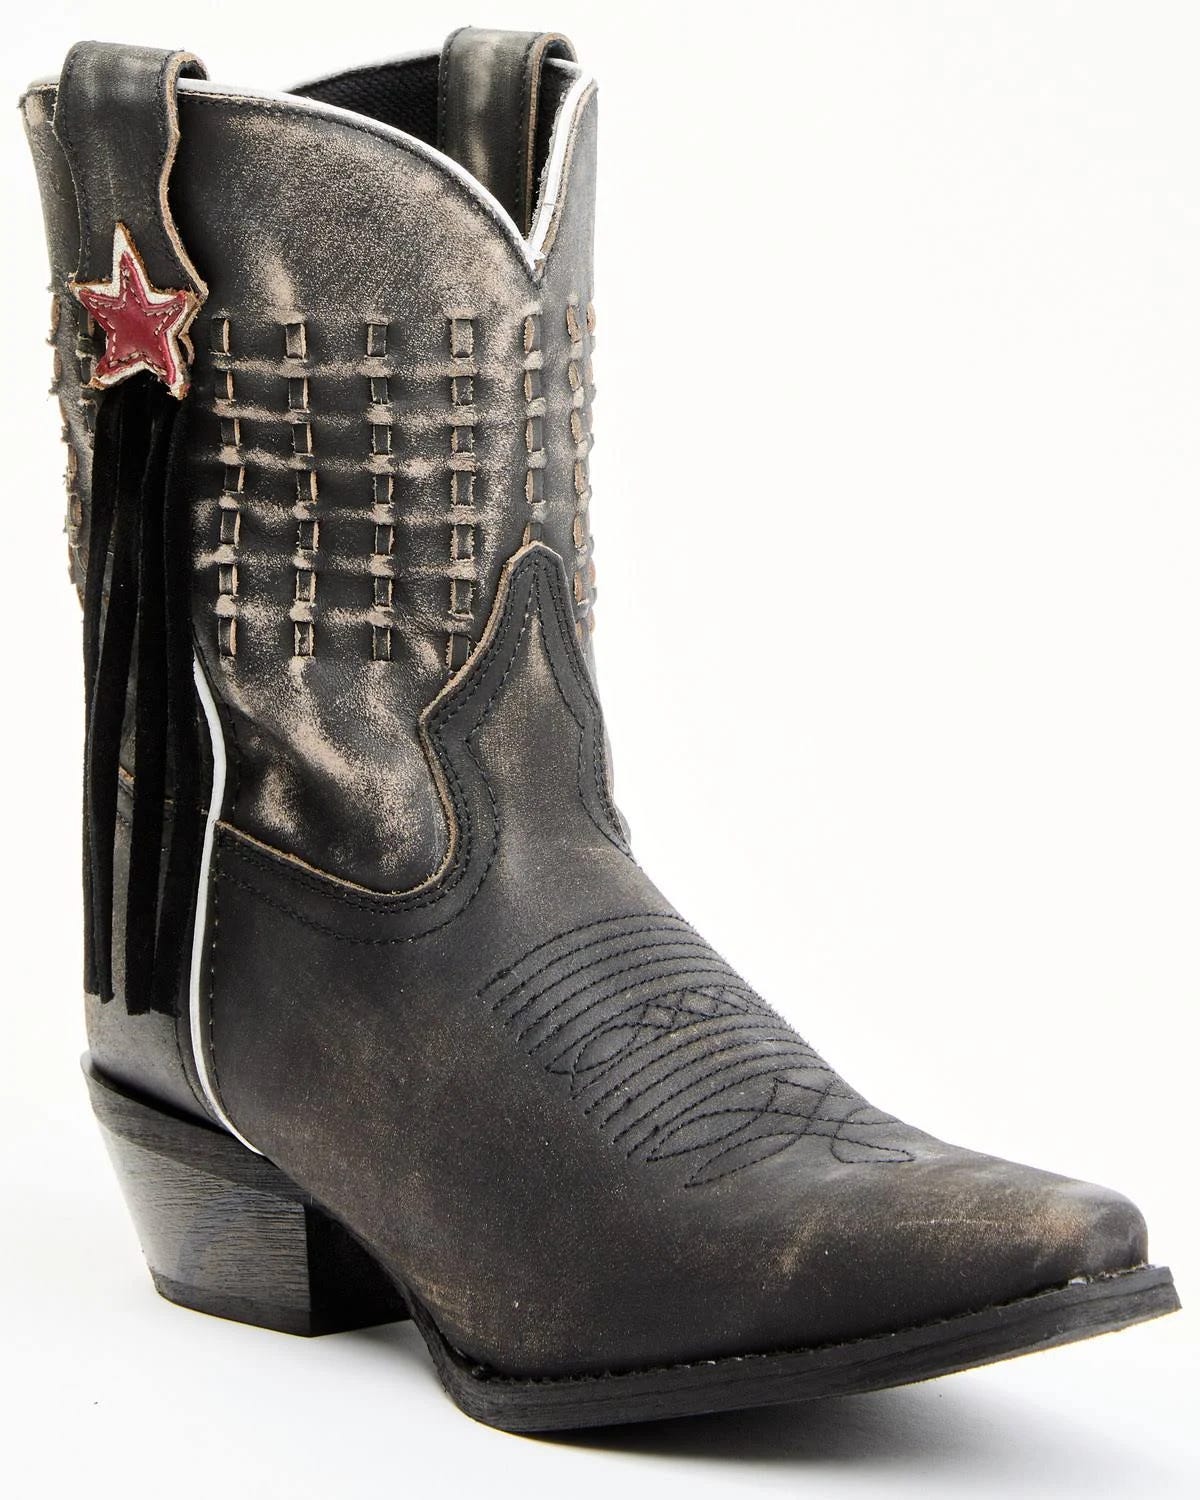 Comfortable Fringe Western Boots for Women - Distressed Snip Toe Design | Image